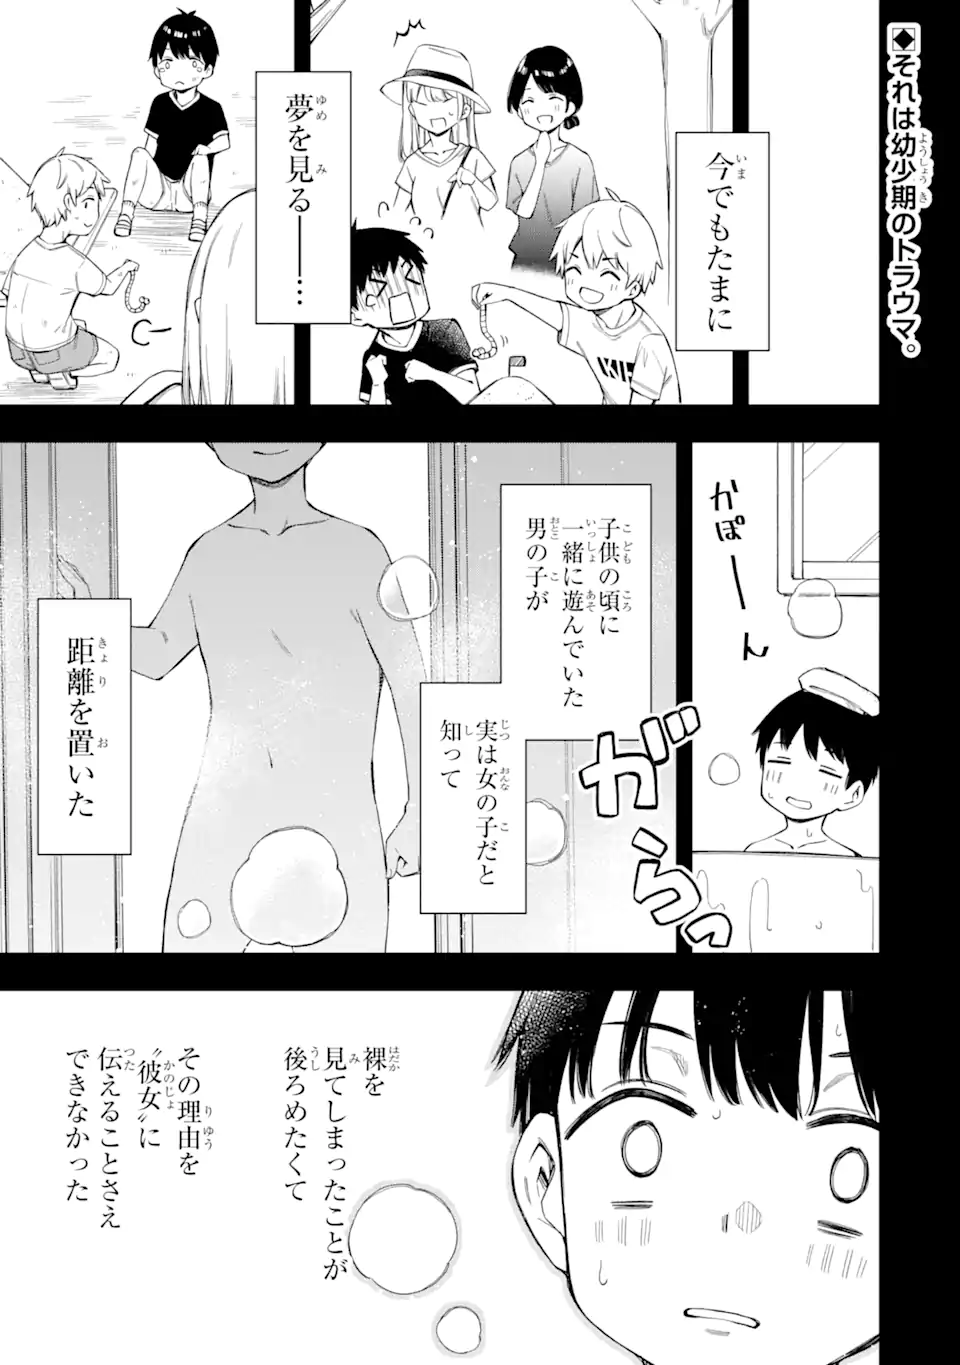 Renai no Jugyou - Chapter 1.1 - Page 5